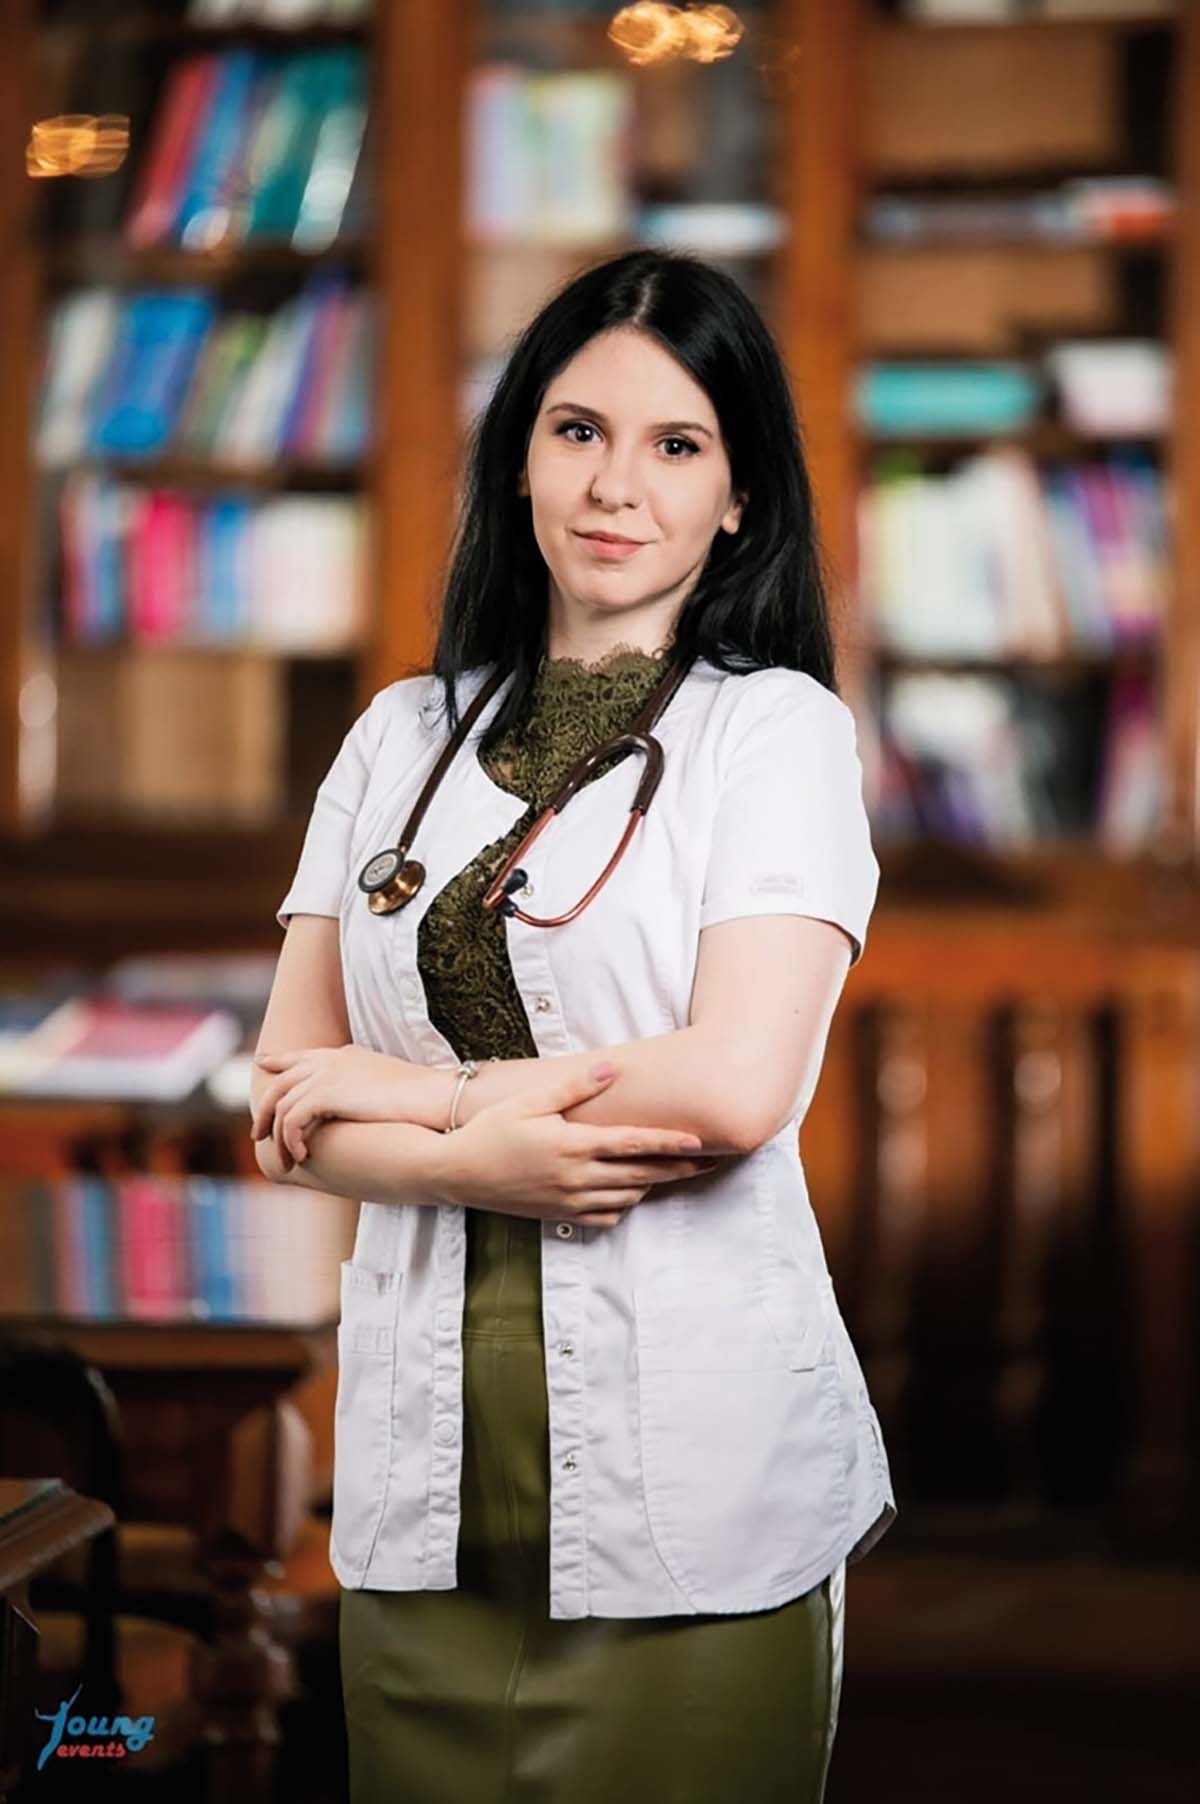 Dr. Iulia Maria Iordache